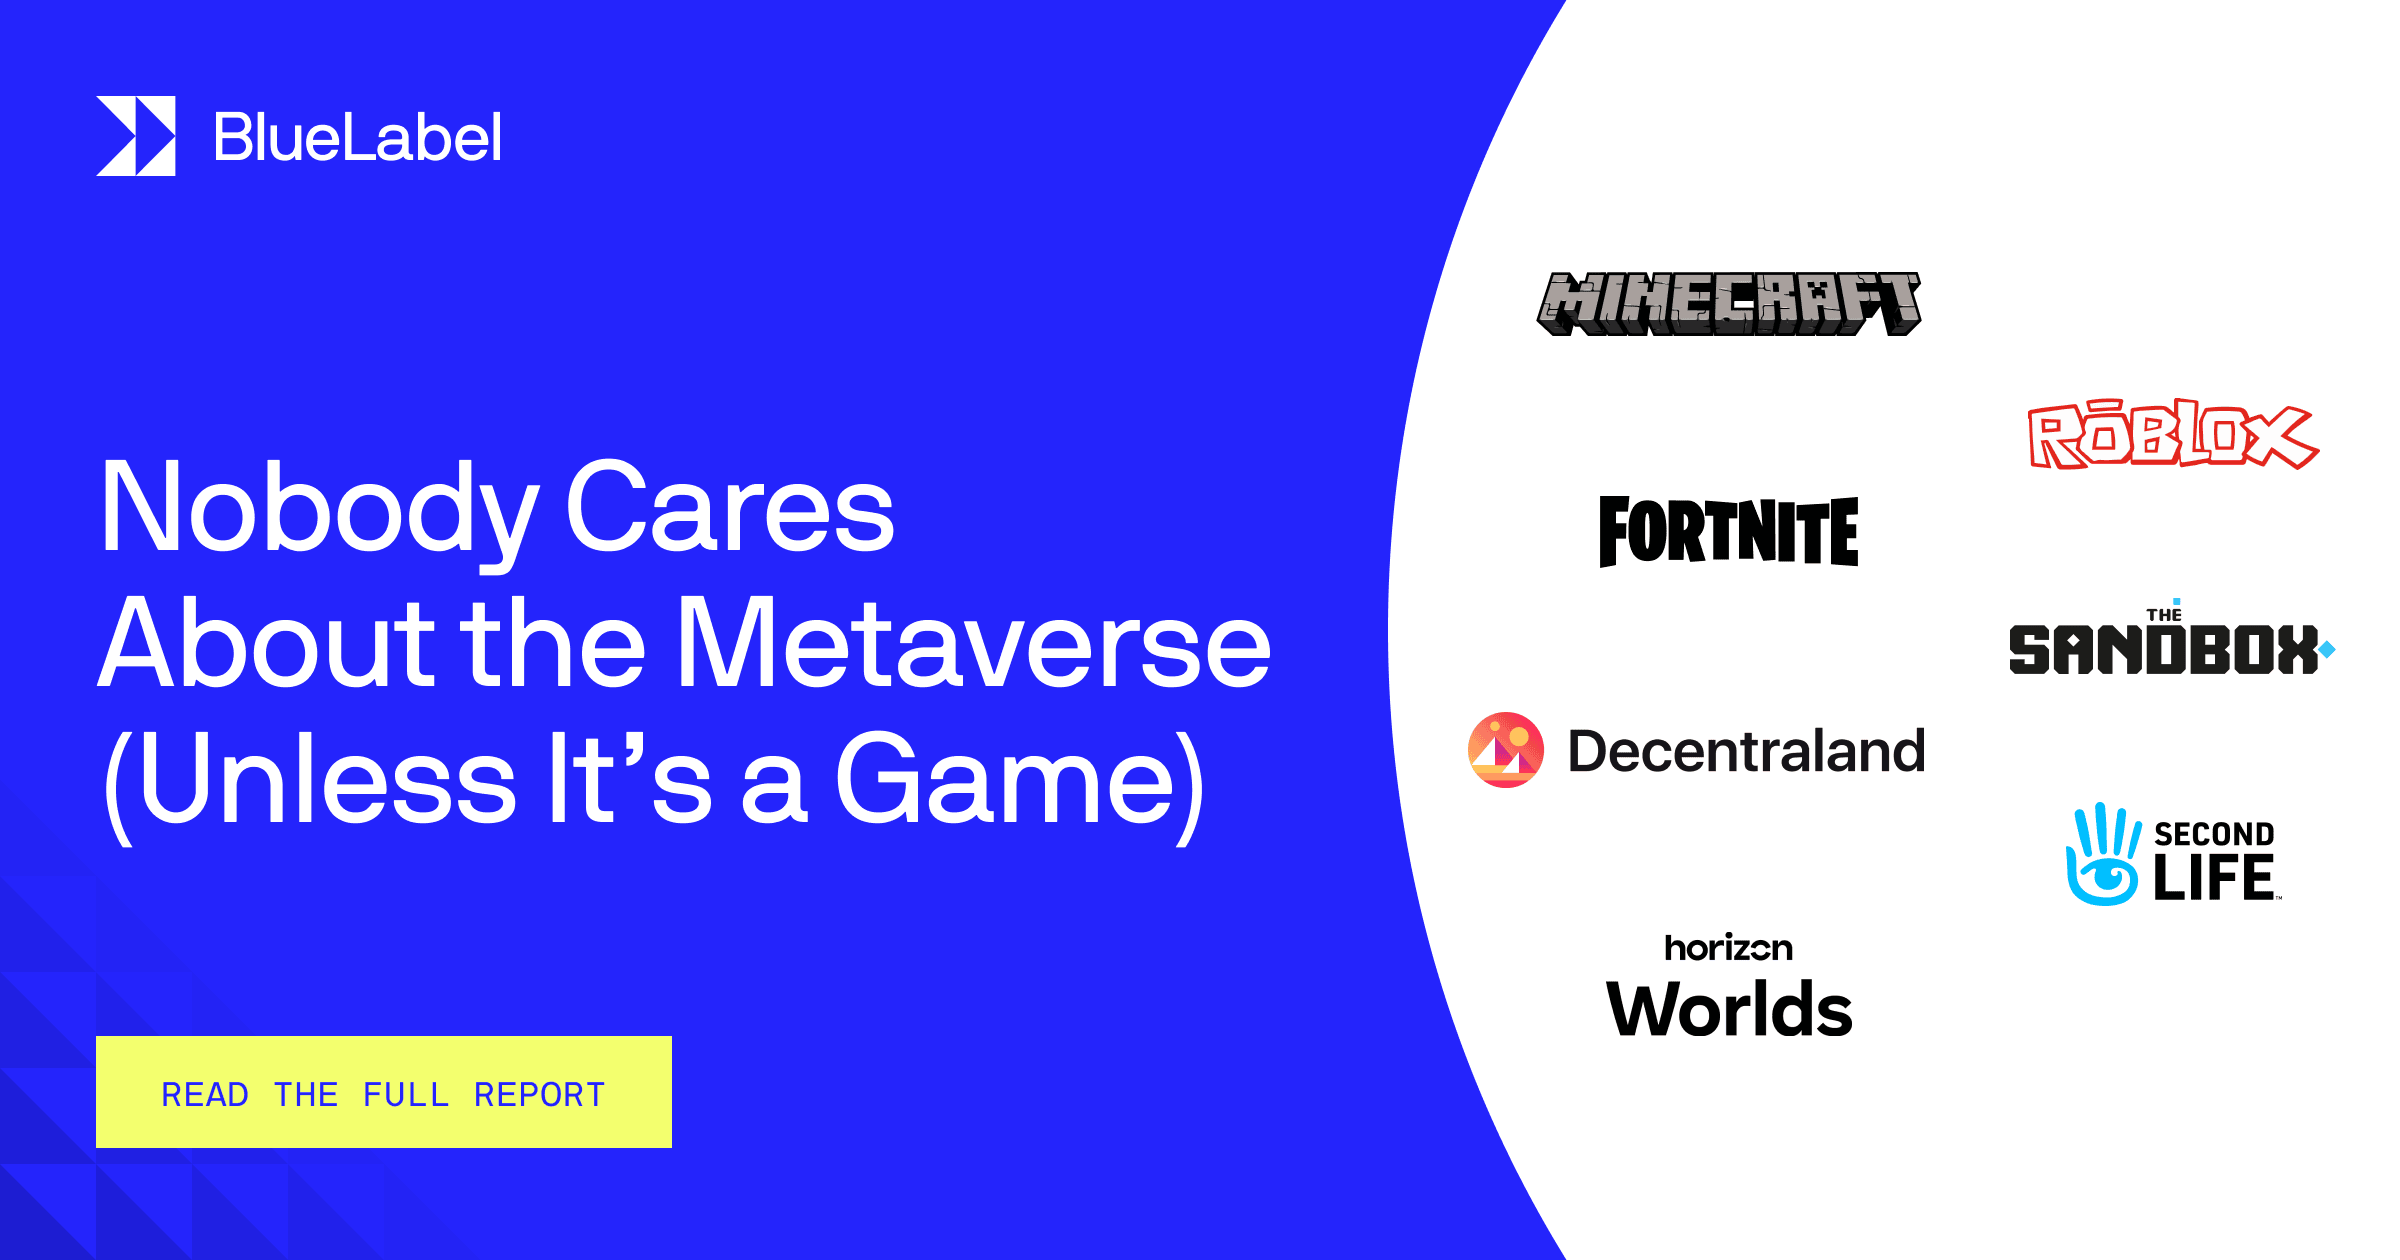 Metaverse Gamers: Demographics, Playing and Spending Behavior